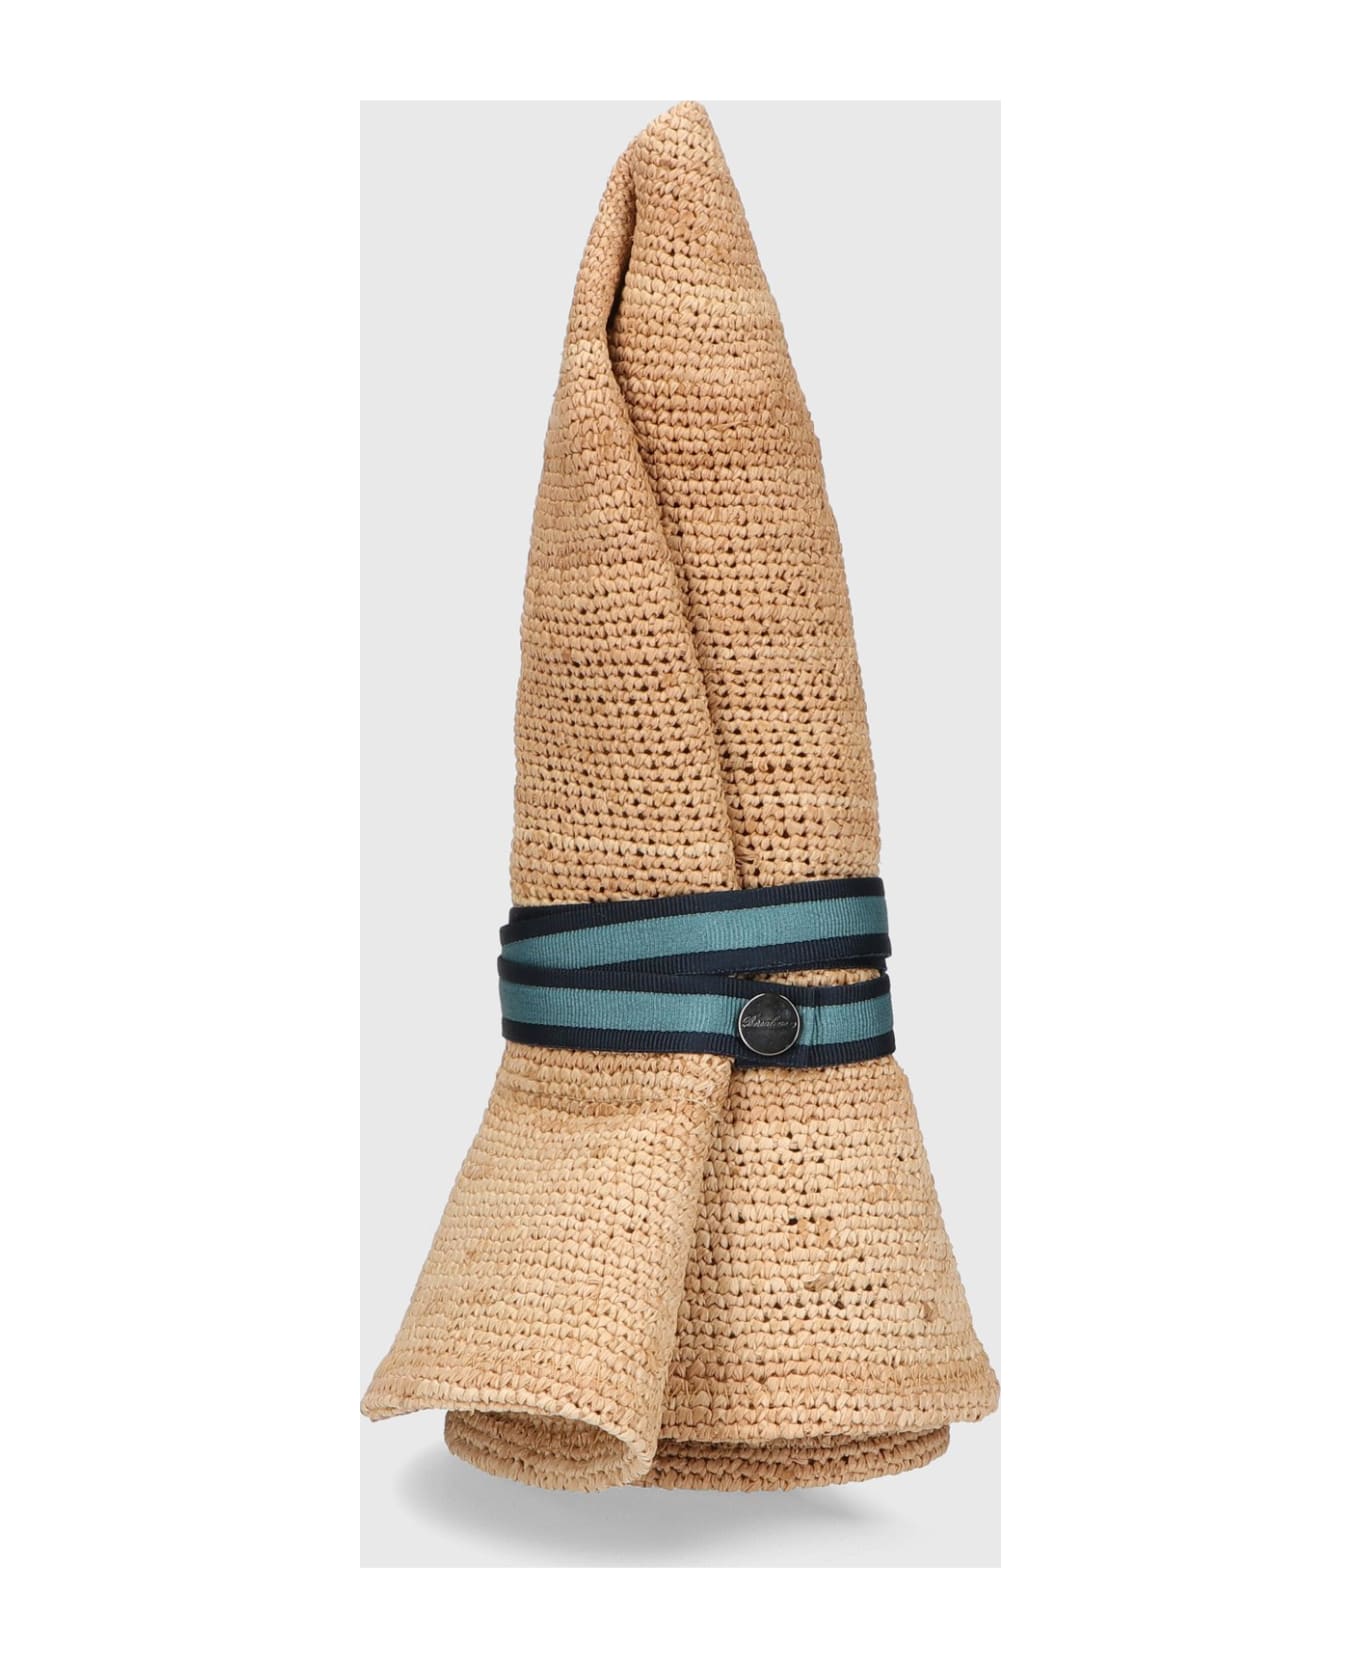 Borsalino Argentina Fine Raffia Crochet - NATURAL, TURQUOISE/BLACK HAT BAND 帽子